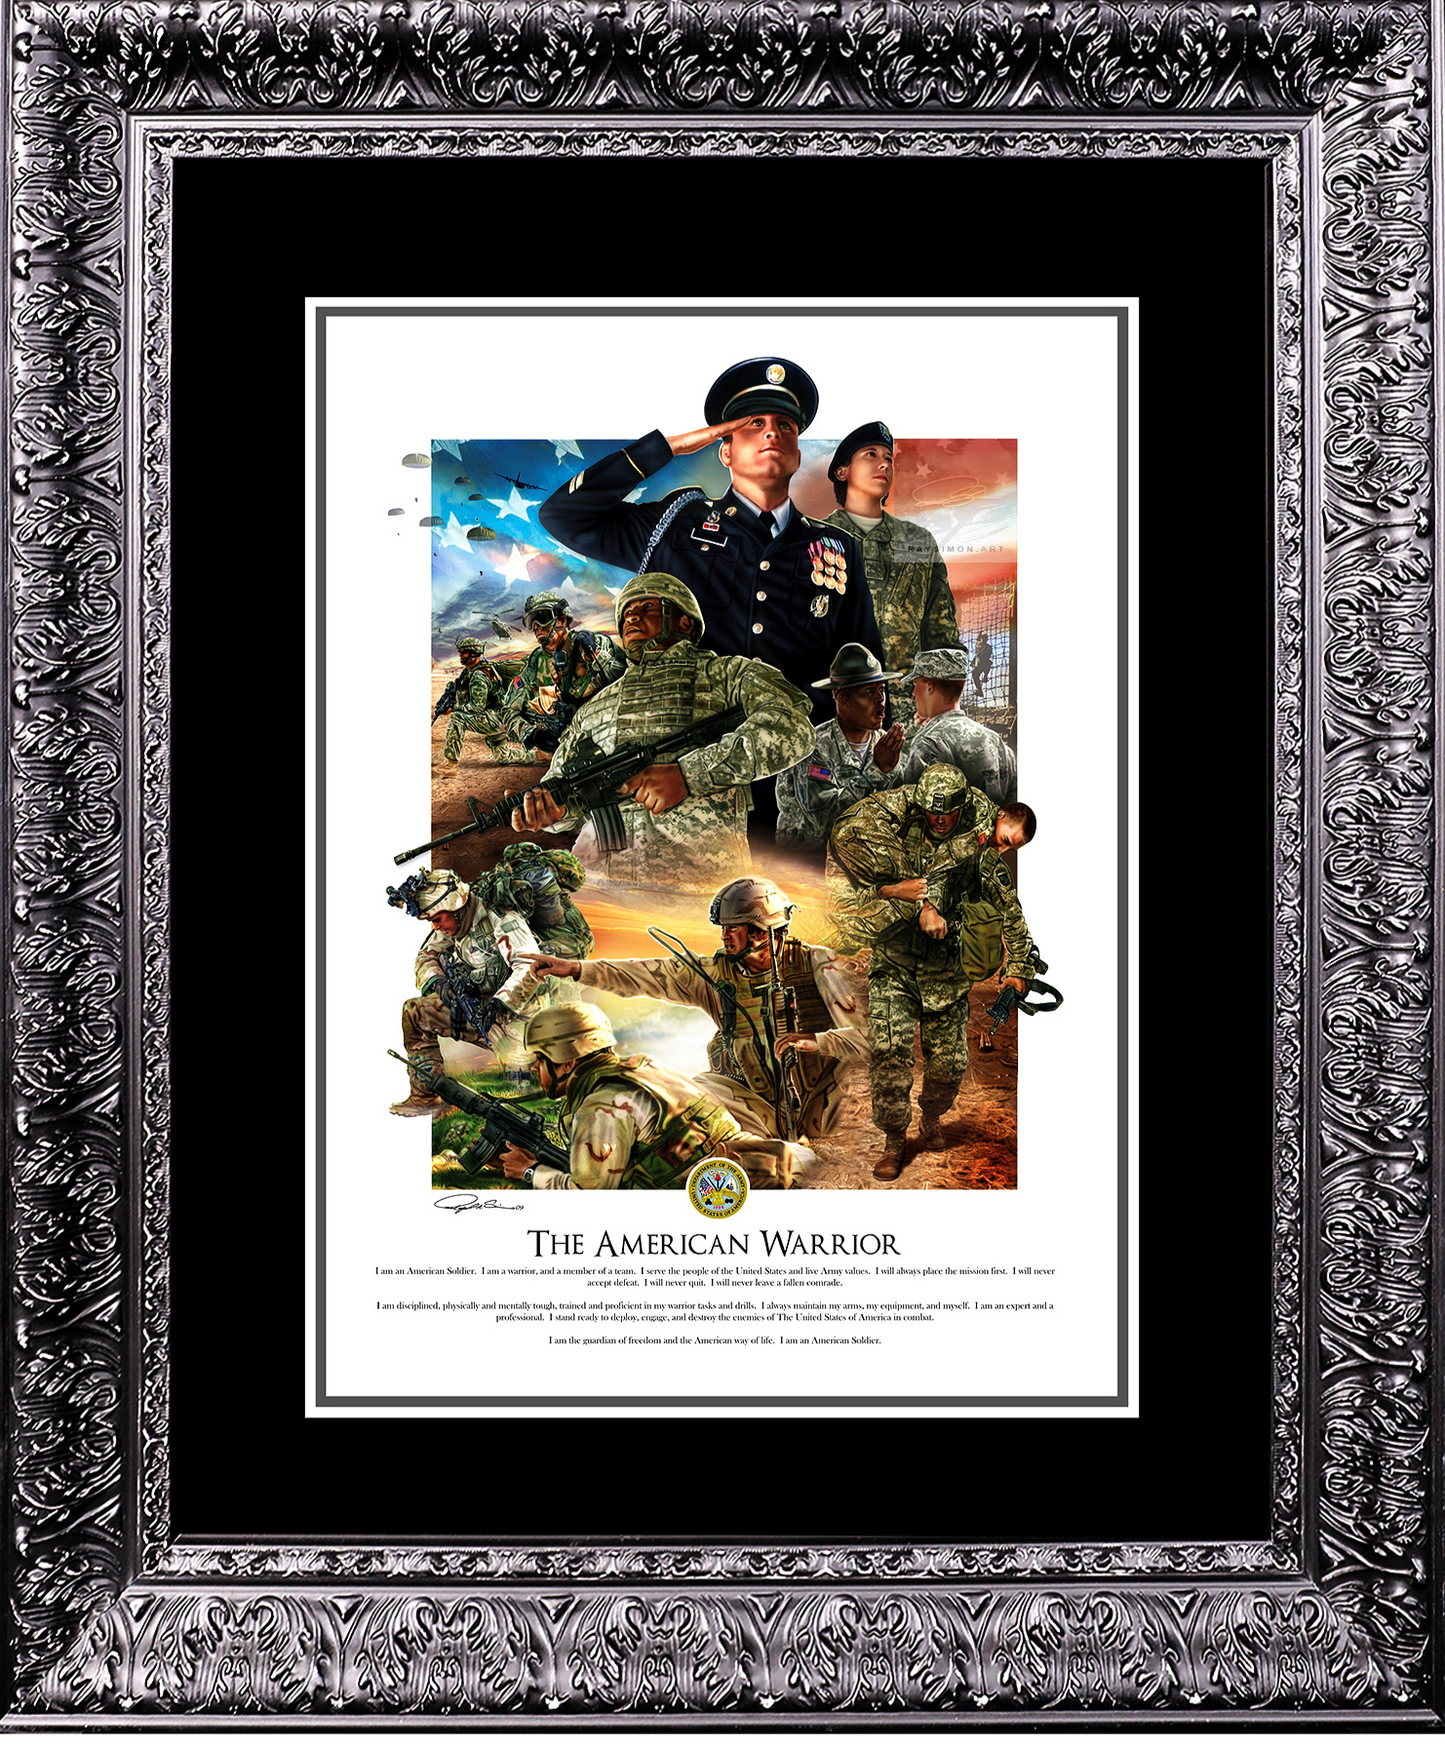 Army Artwork - 'The American Warrior'